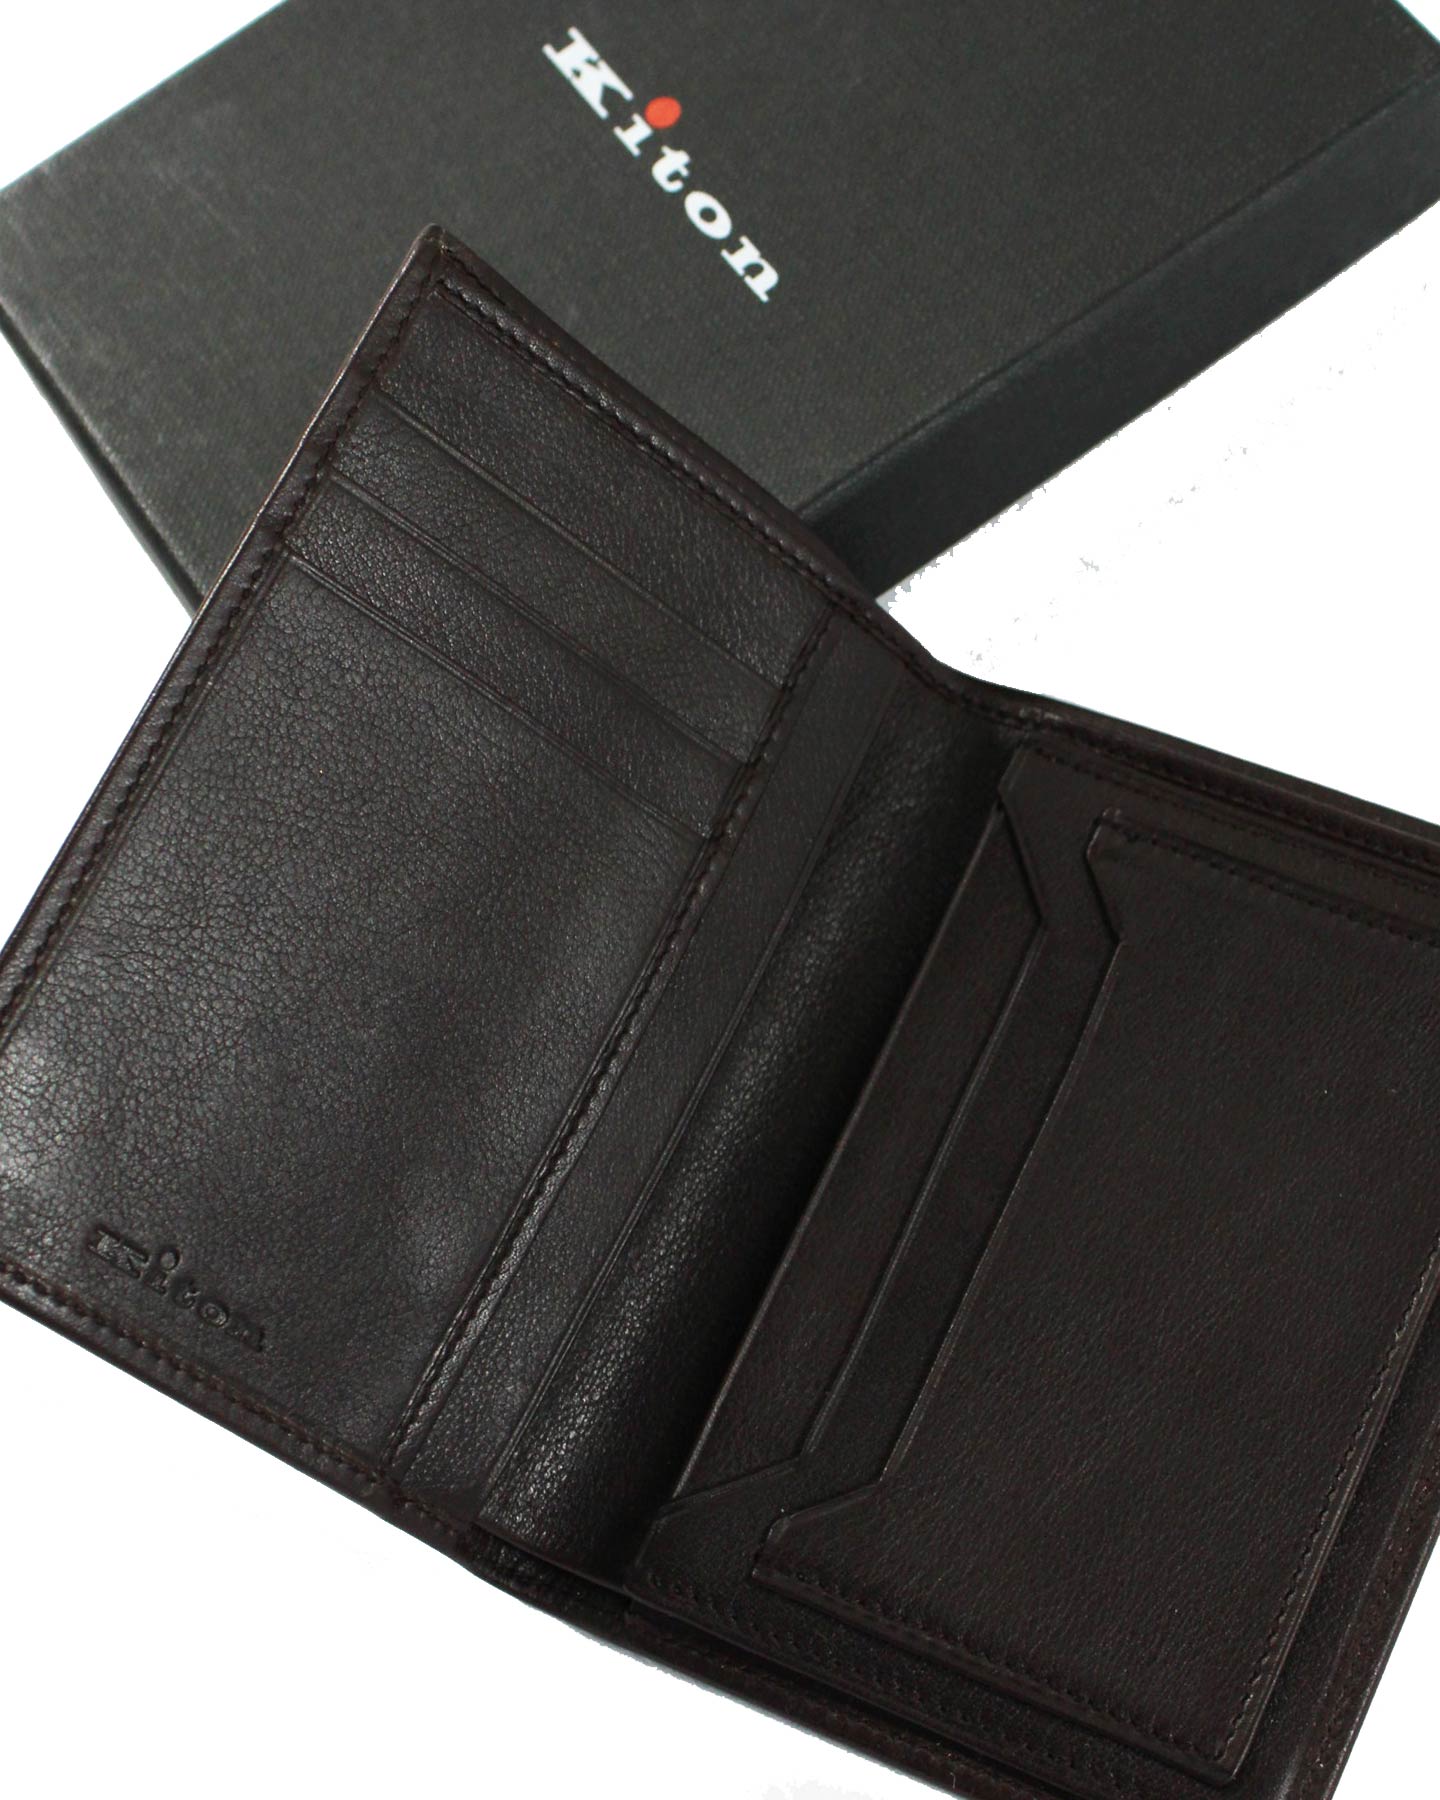 Kiton Wallet - Dark Brown Leather Men Wallet